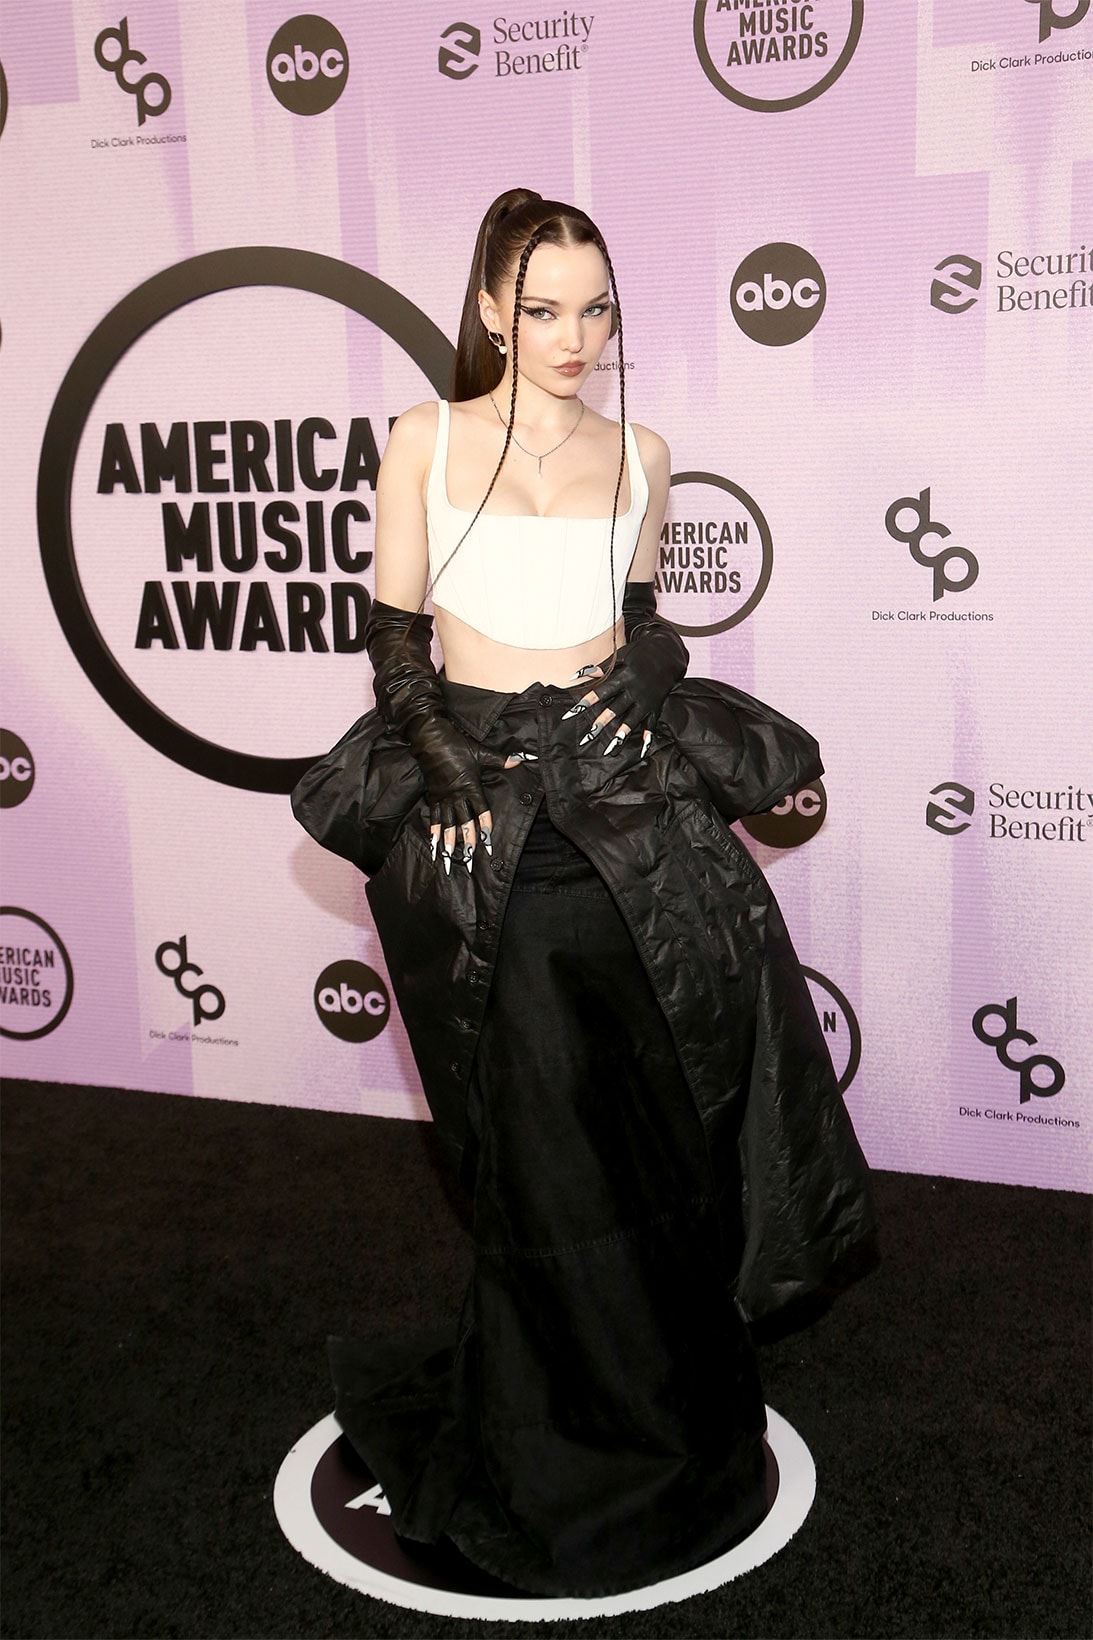 American Music Awards AMAs Best Dressed Celebrities Red Carpet Images Karrueche Tran Tinashe Kali Uchis